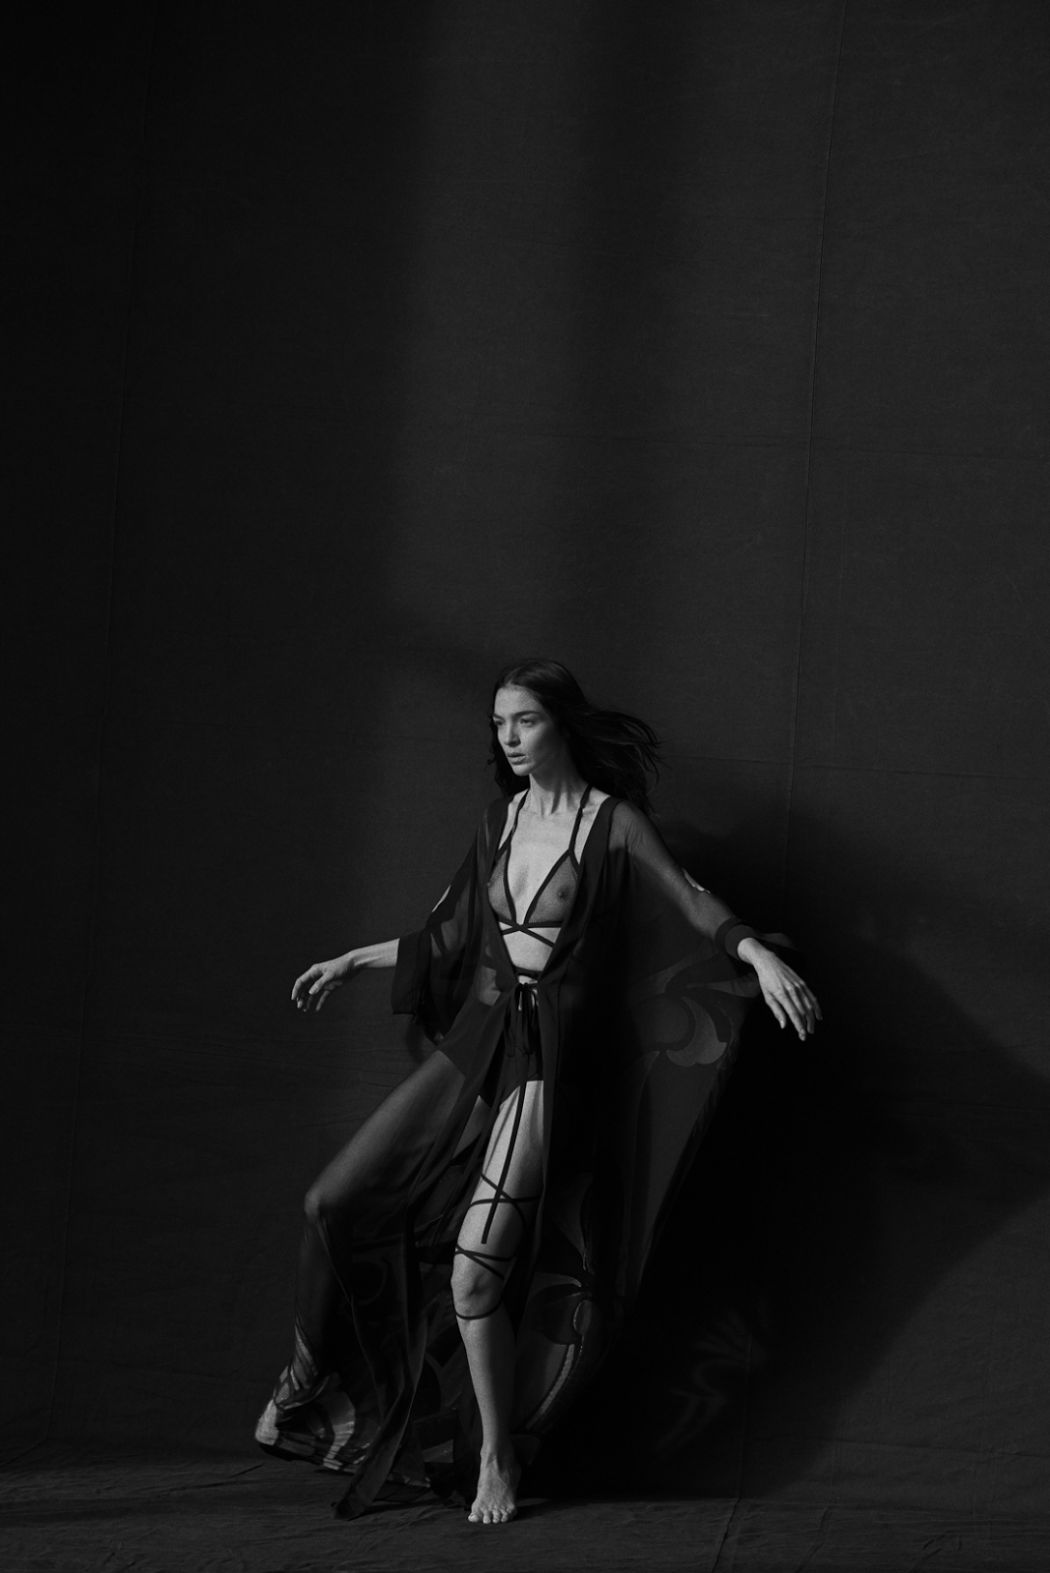 Mariacarla Boscono by Peter Lindbergh for Vogue Italia January 2014